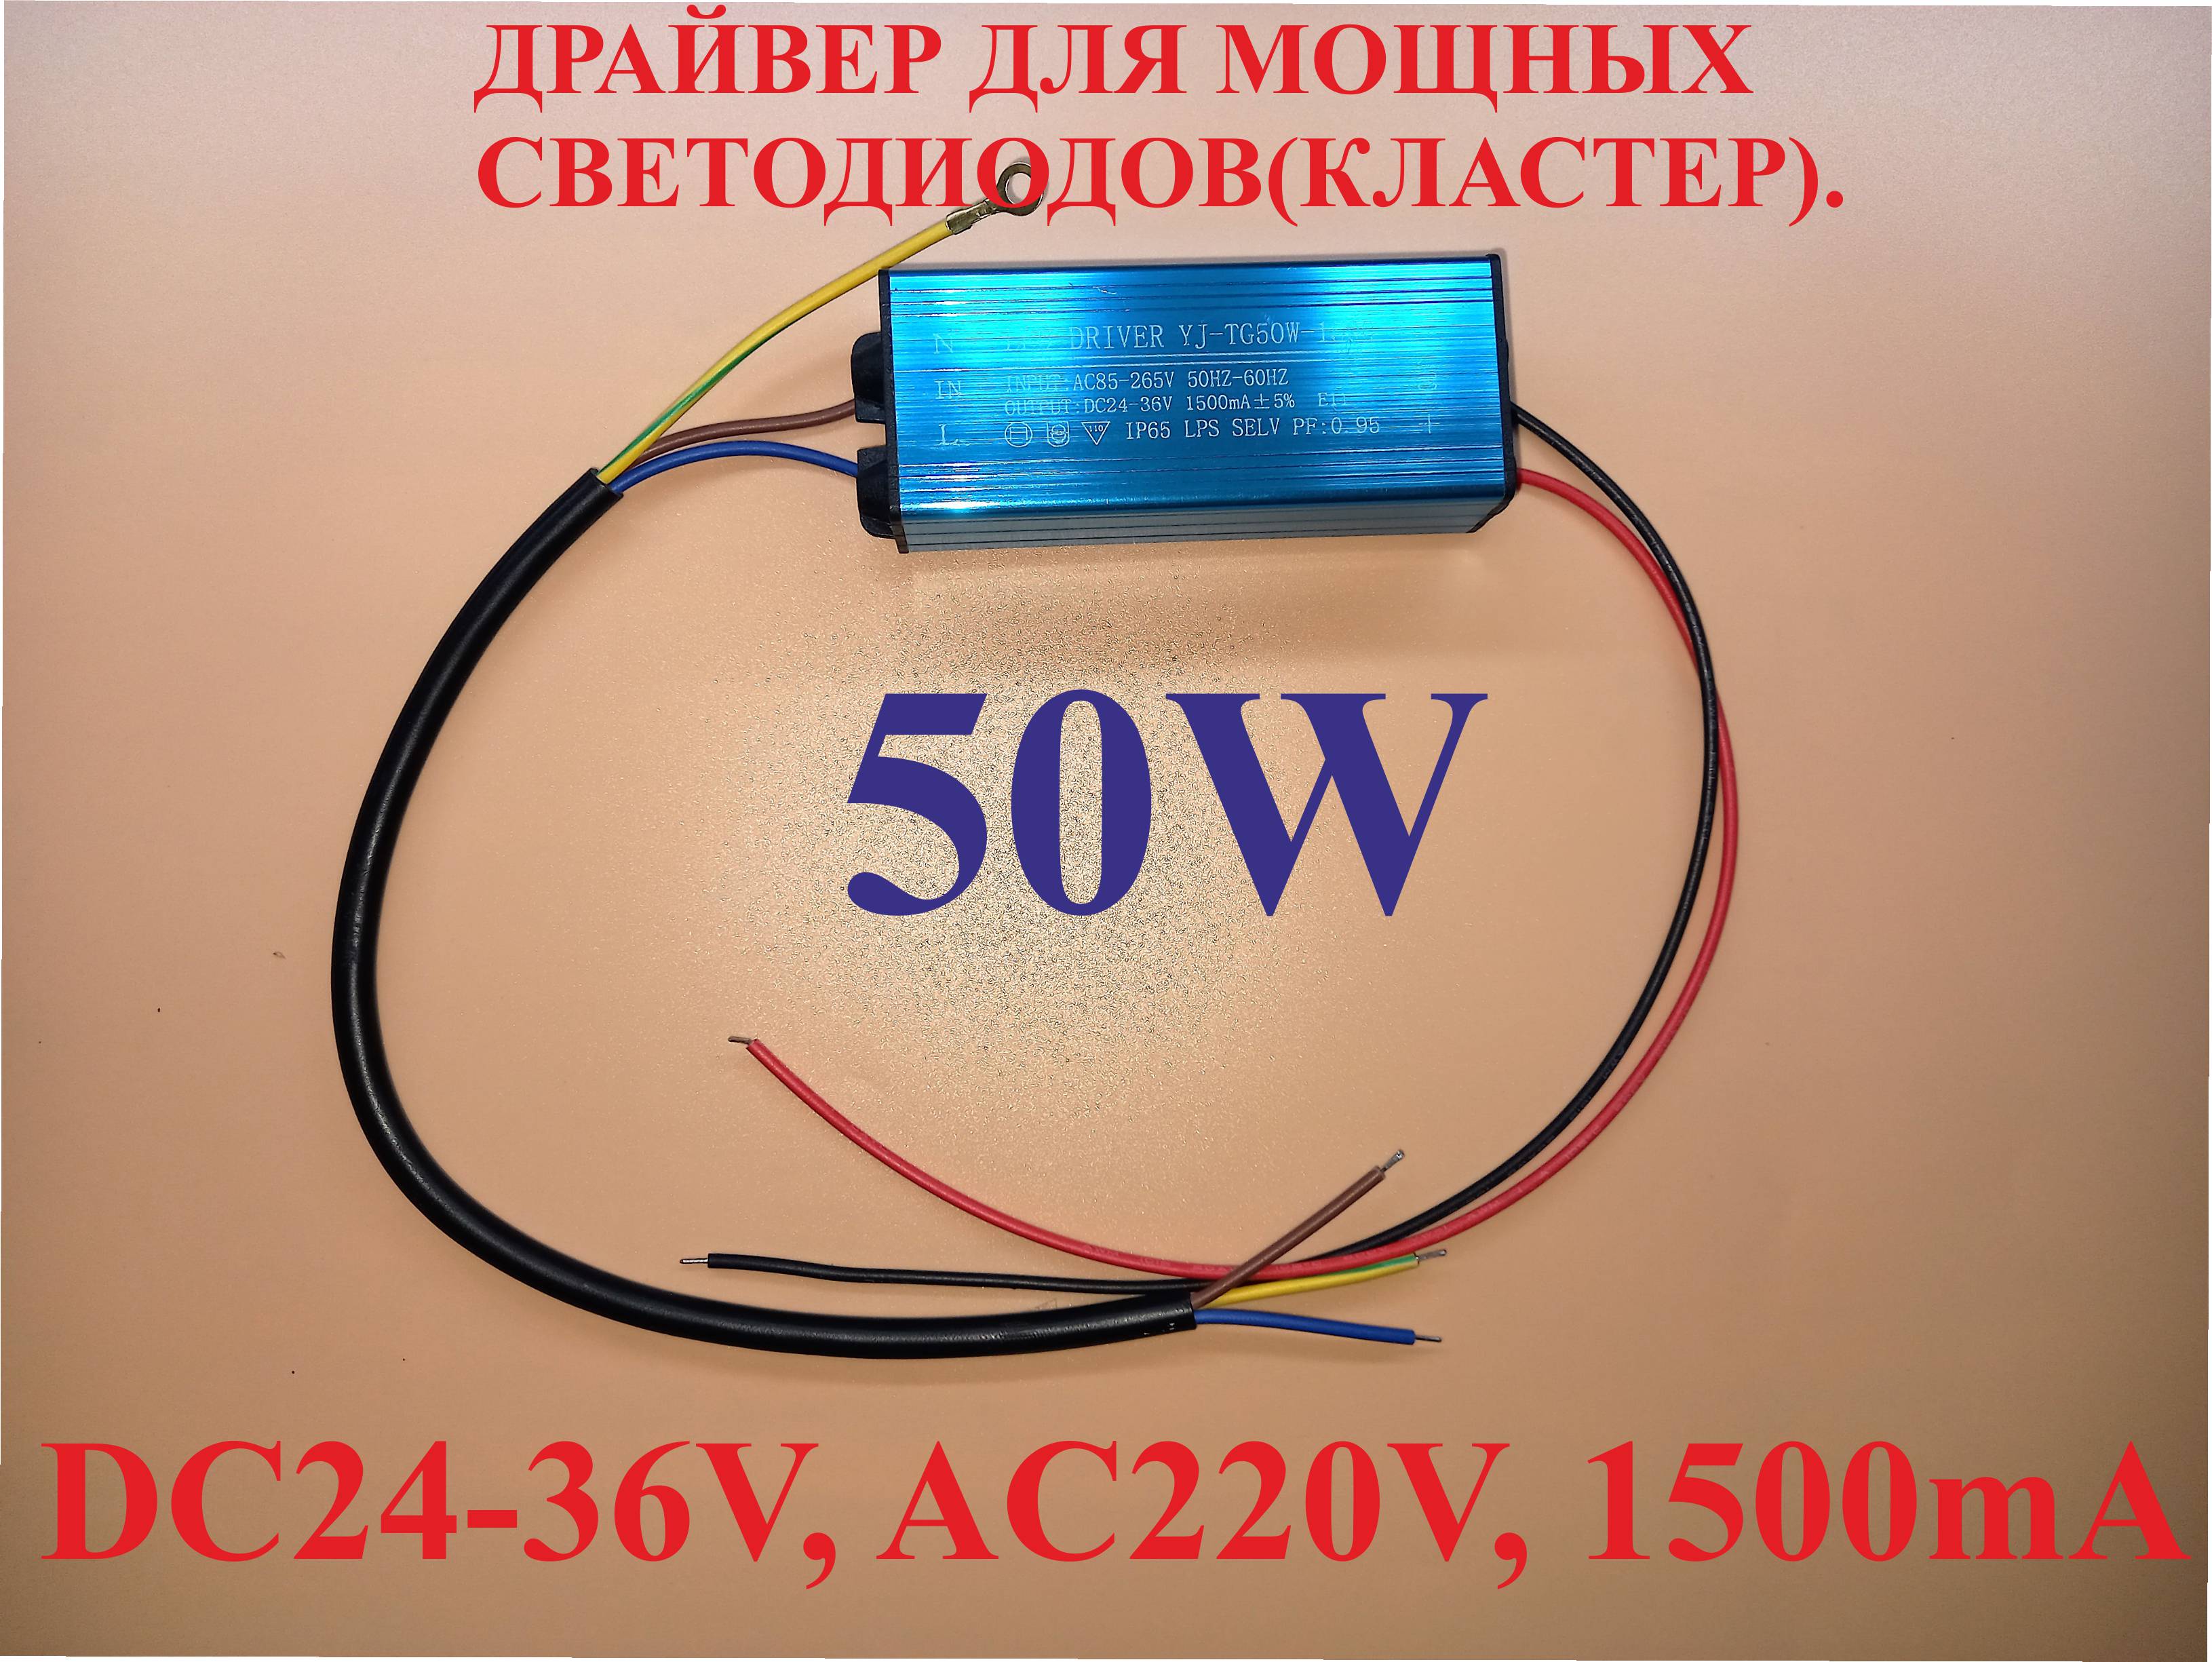 Драйвер ЗВЕЗДА 50W 27-38V IP65 для LED 50W светодиодов кластеров COB led lp 5 6 0 98x эра led драйвер для spl 5 6 premium